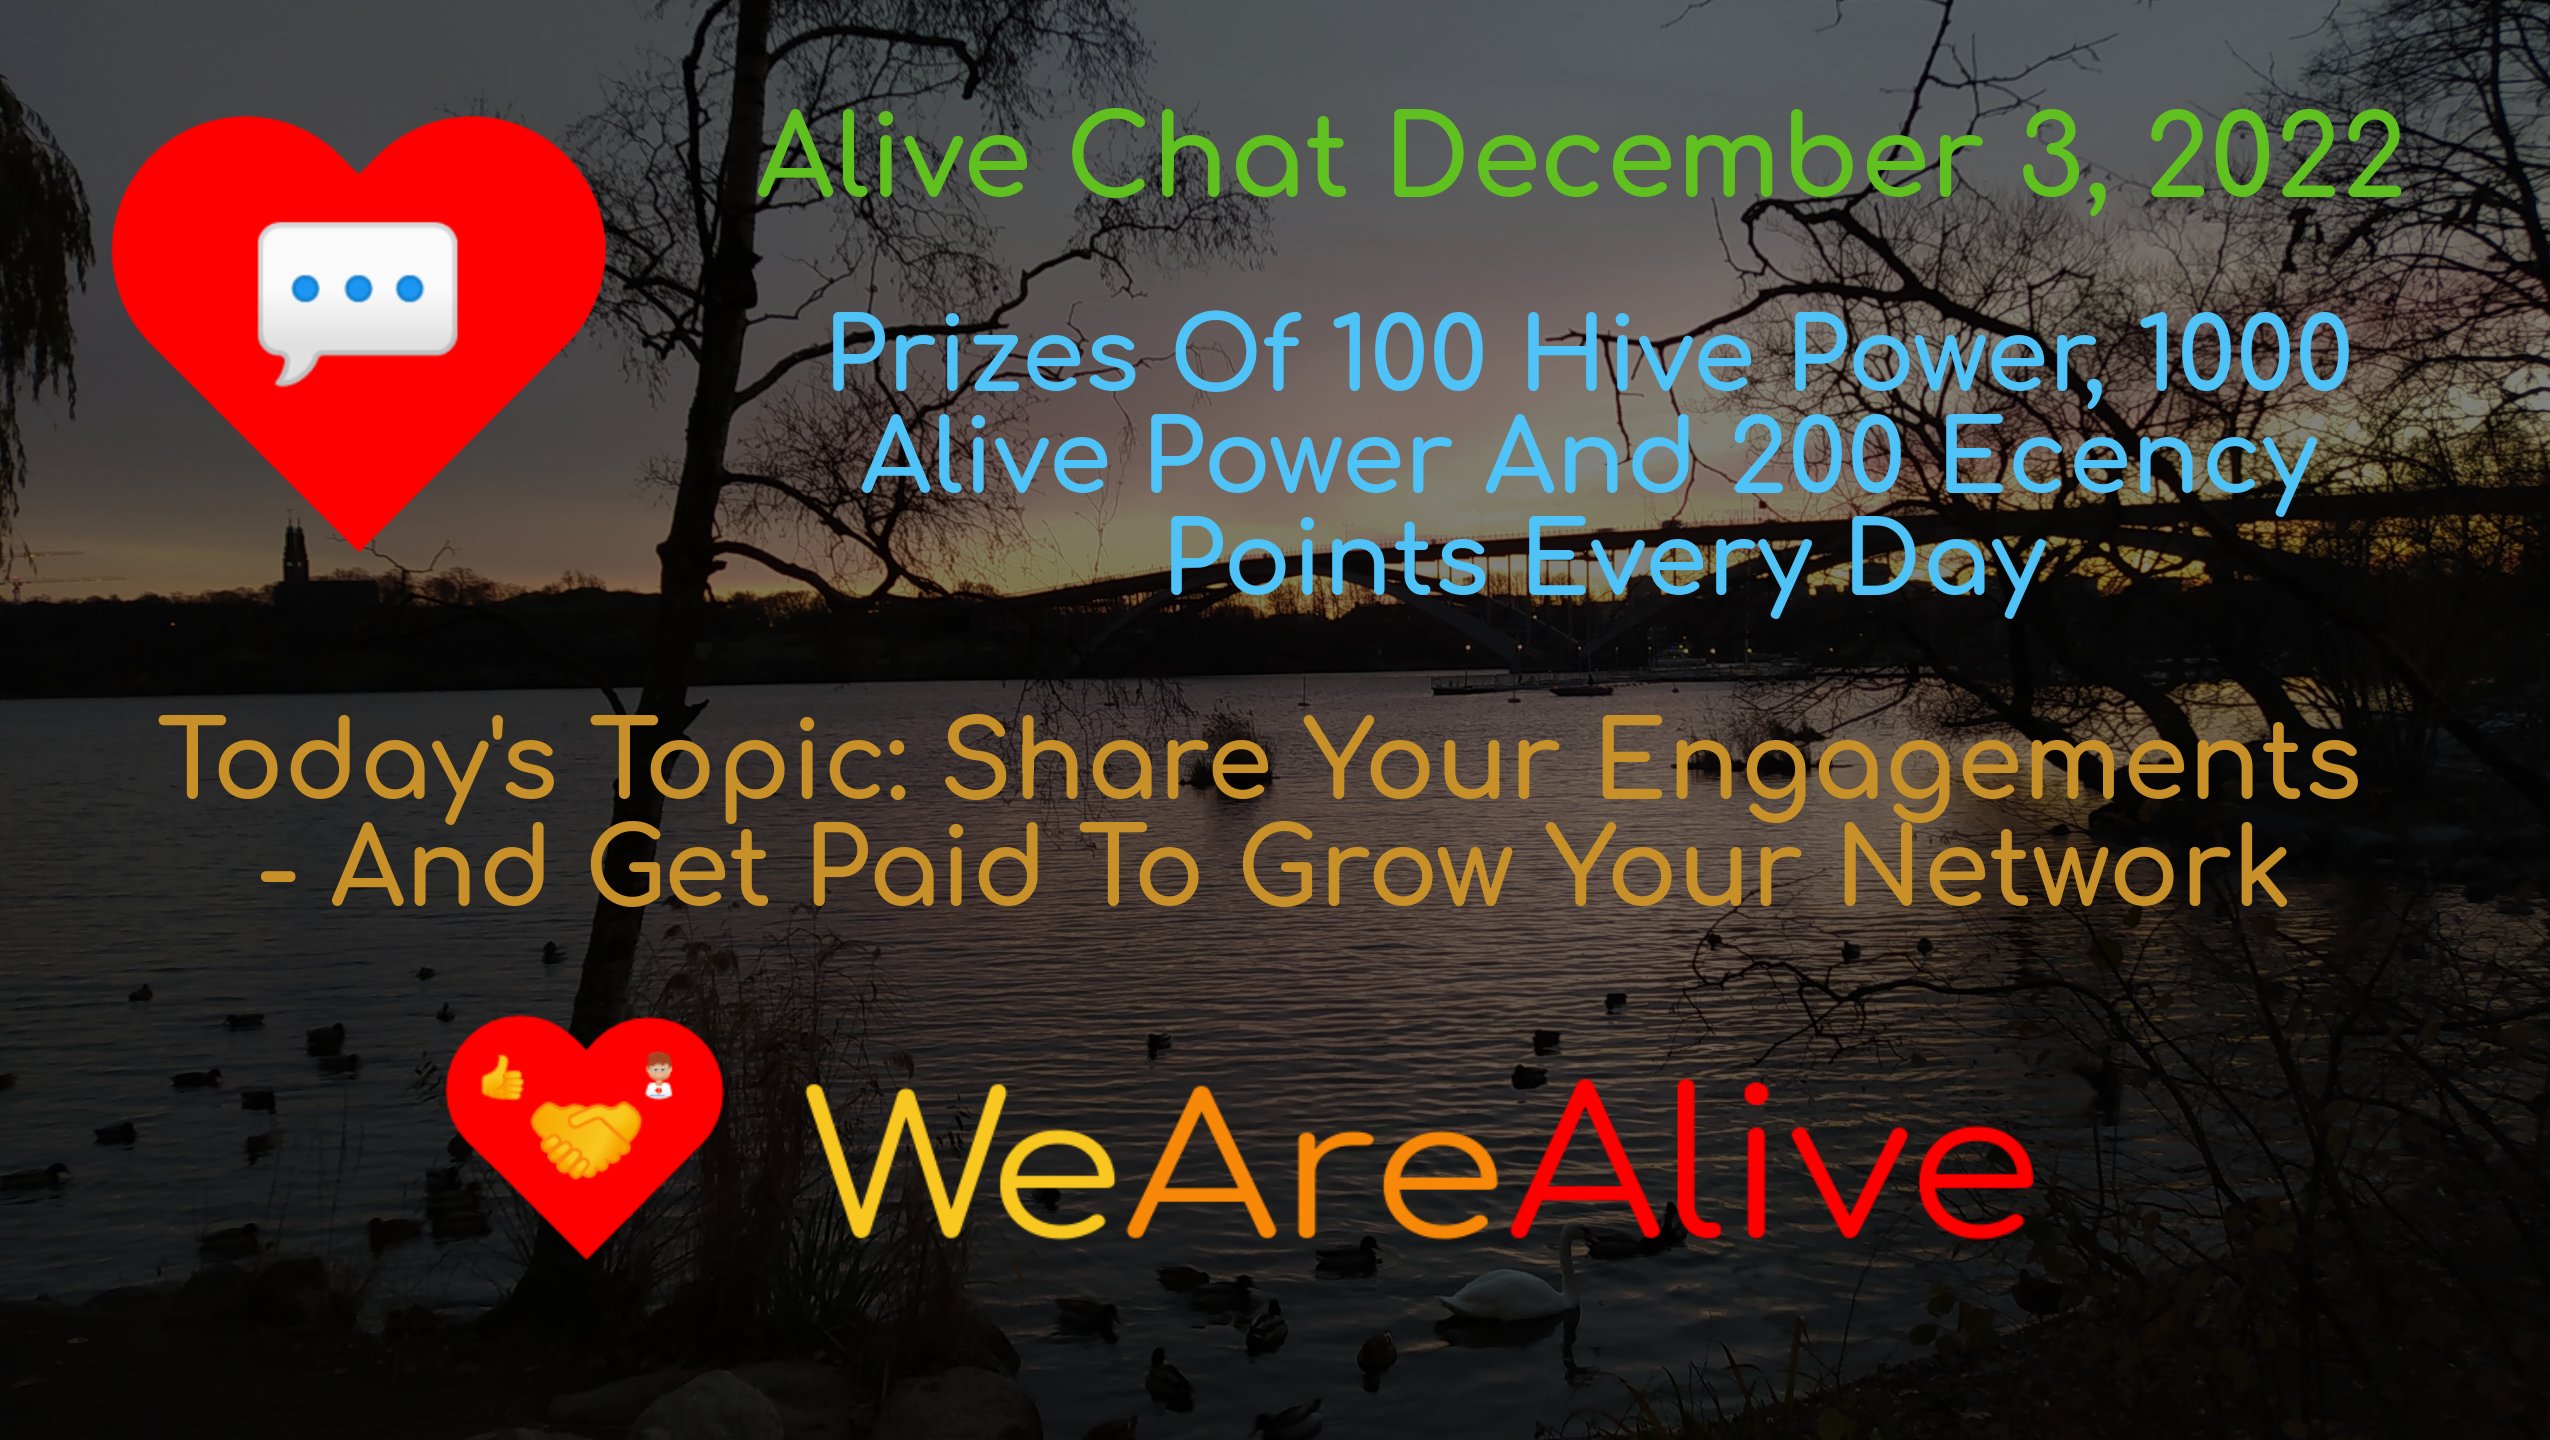 @alive.chat/alive-chat-december-3-2022